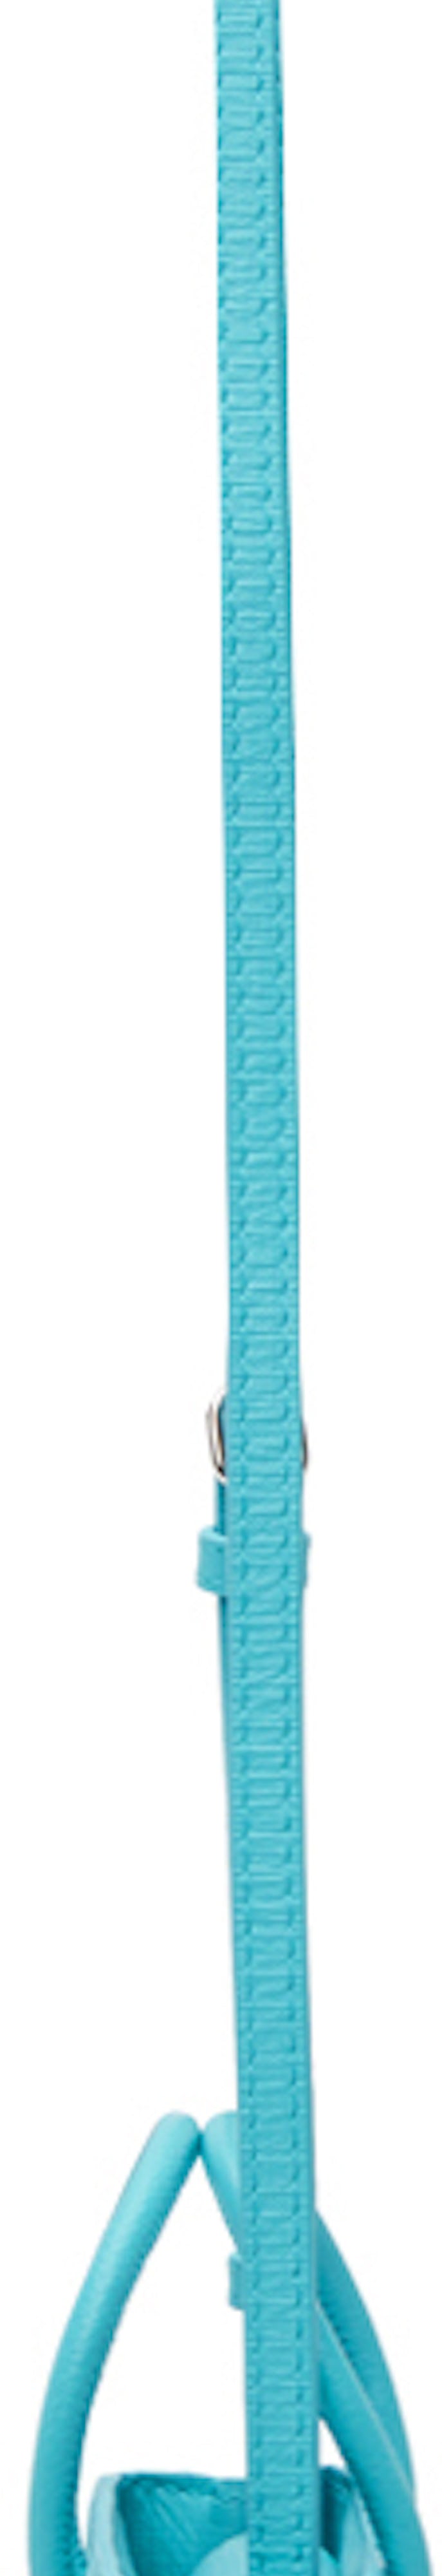 Blue Shopping Phone Holder Bag: additional image